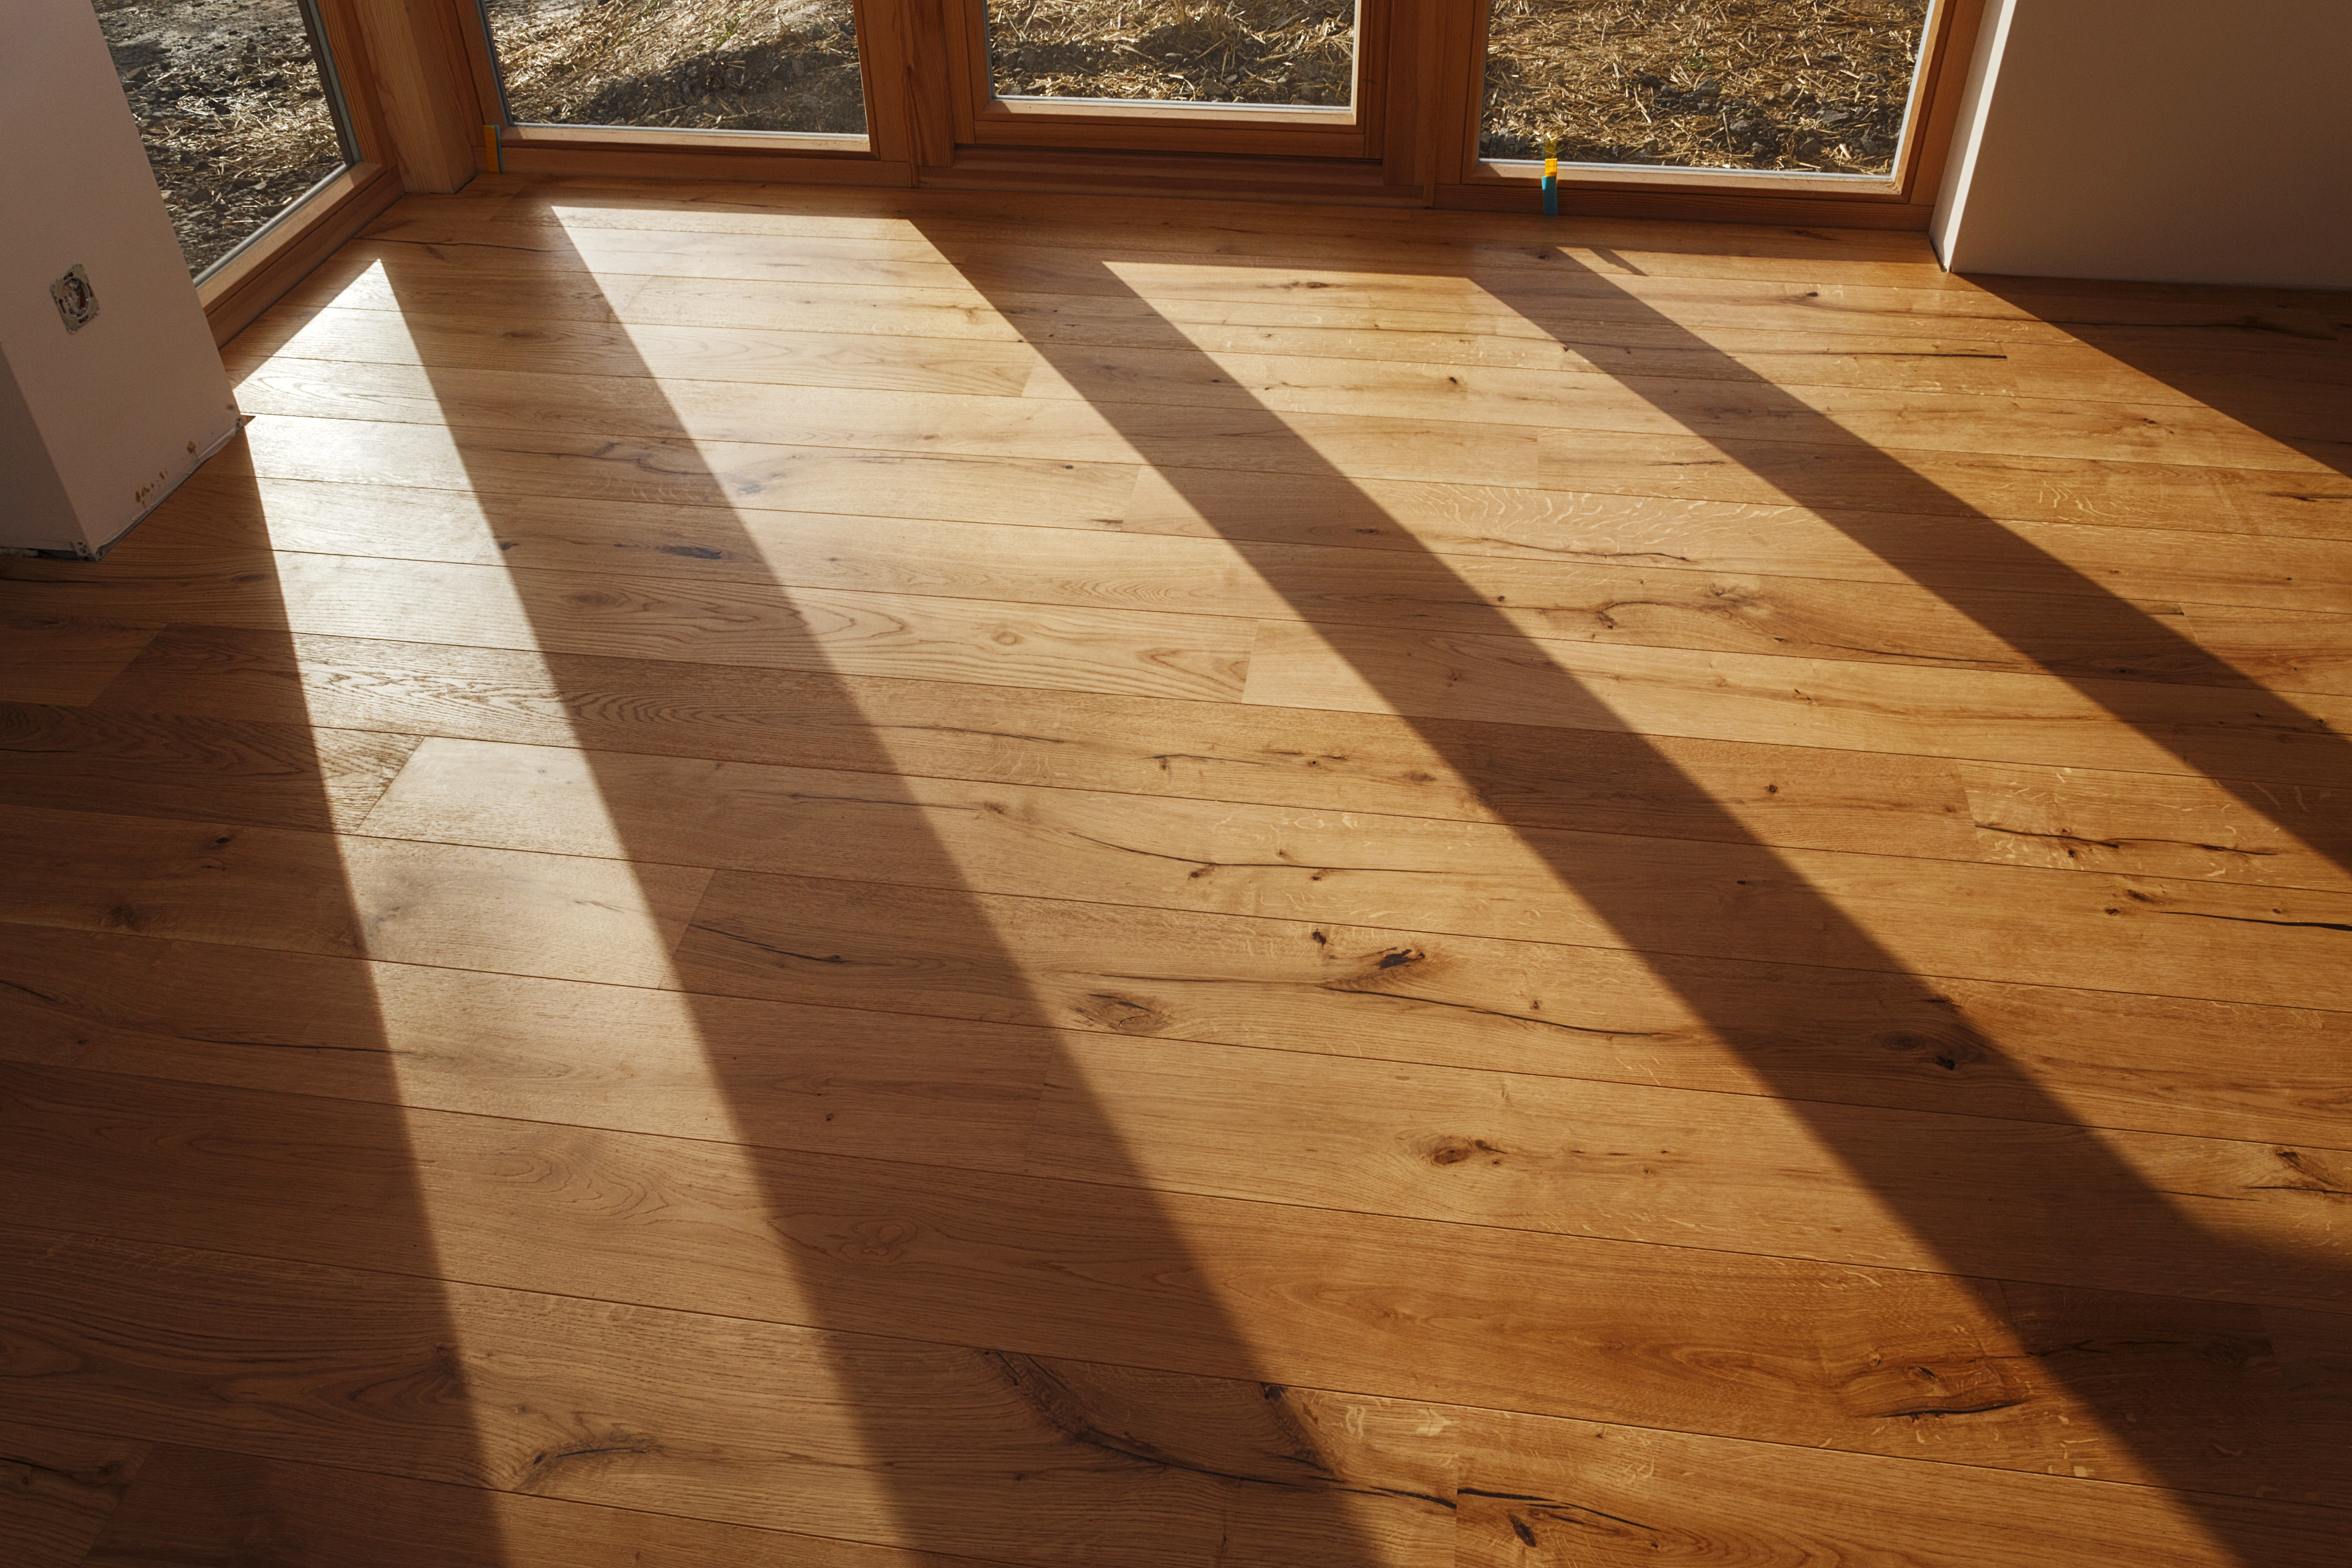 Wood Flooring Hardwood Versus, Most Expensive Engineered Hardwood Flooring